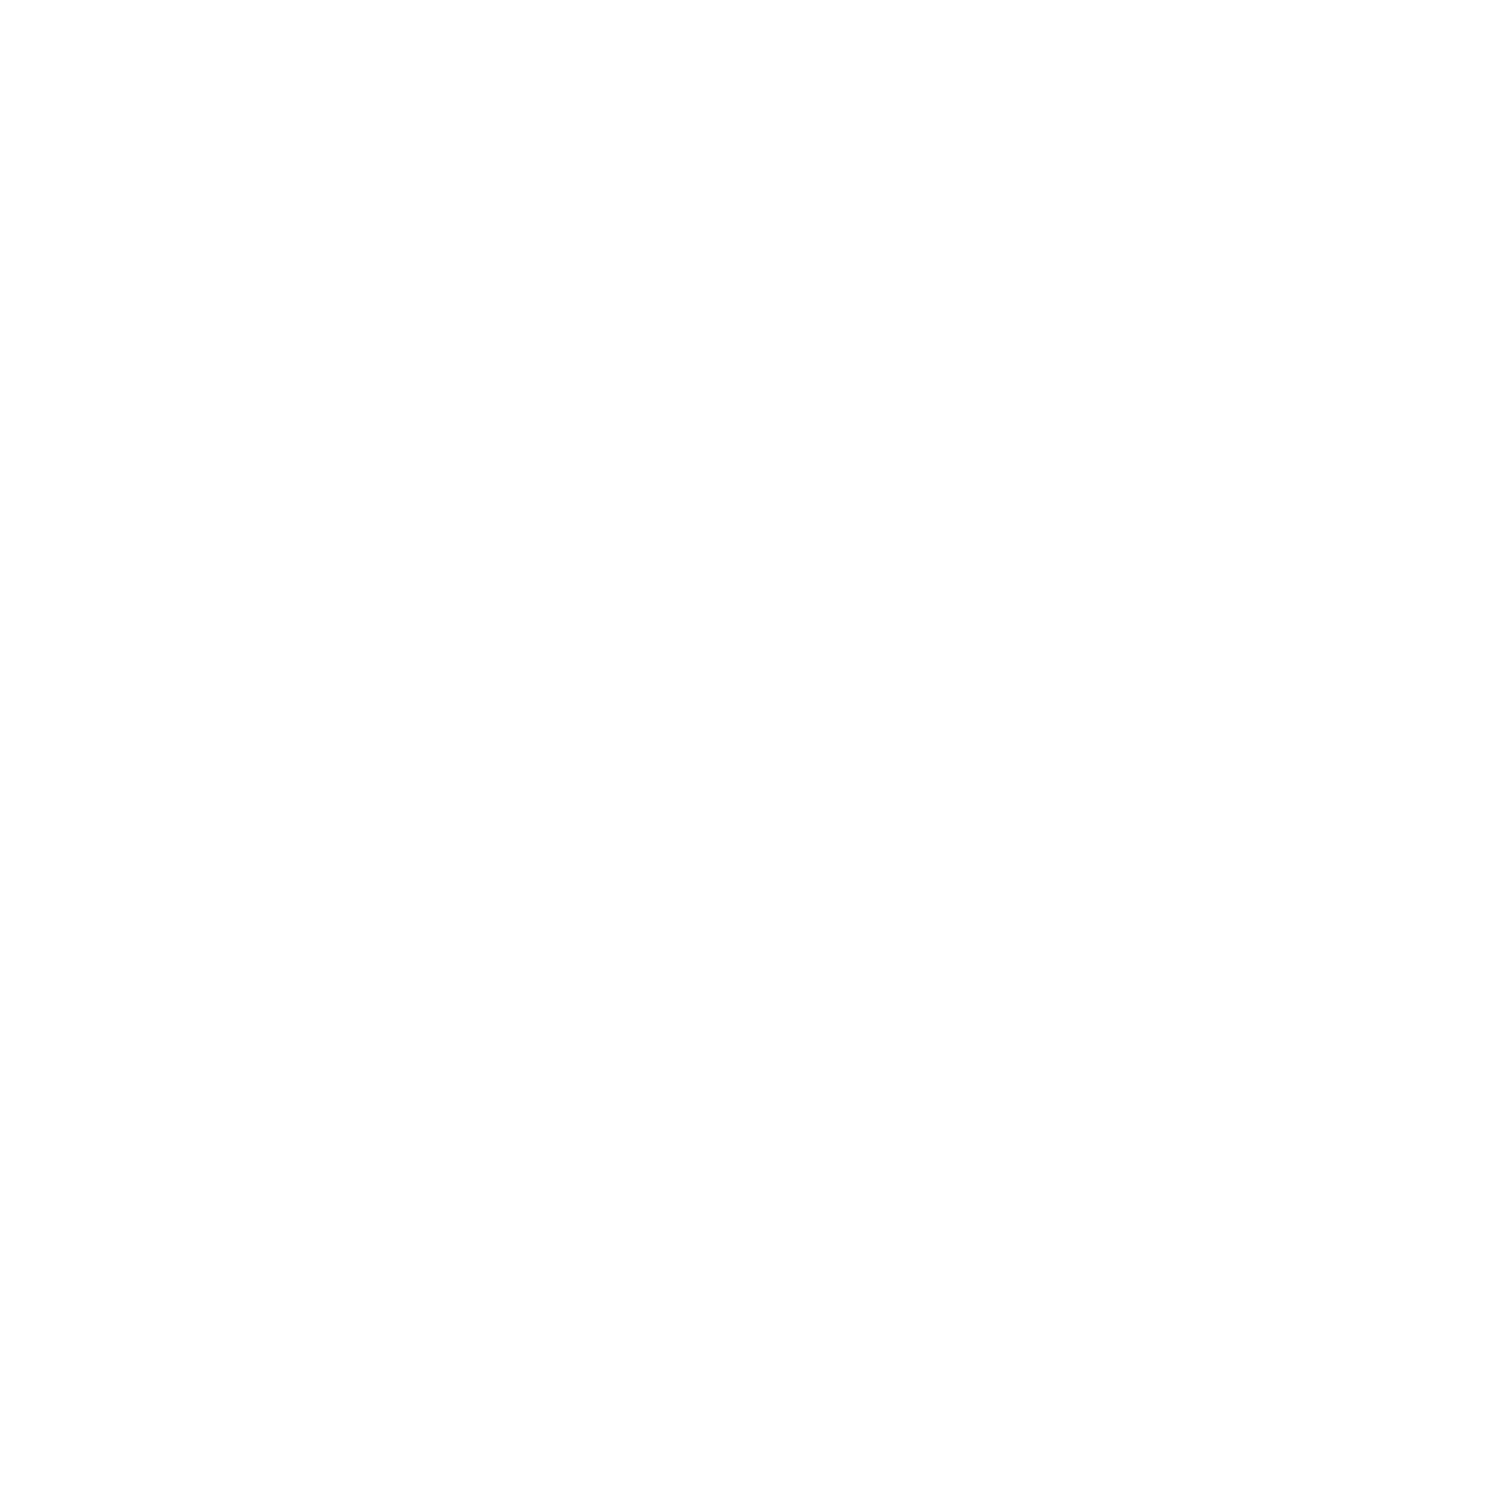 Cullen/Frost Bankers logo for dark backgrounds (transparent PNG)